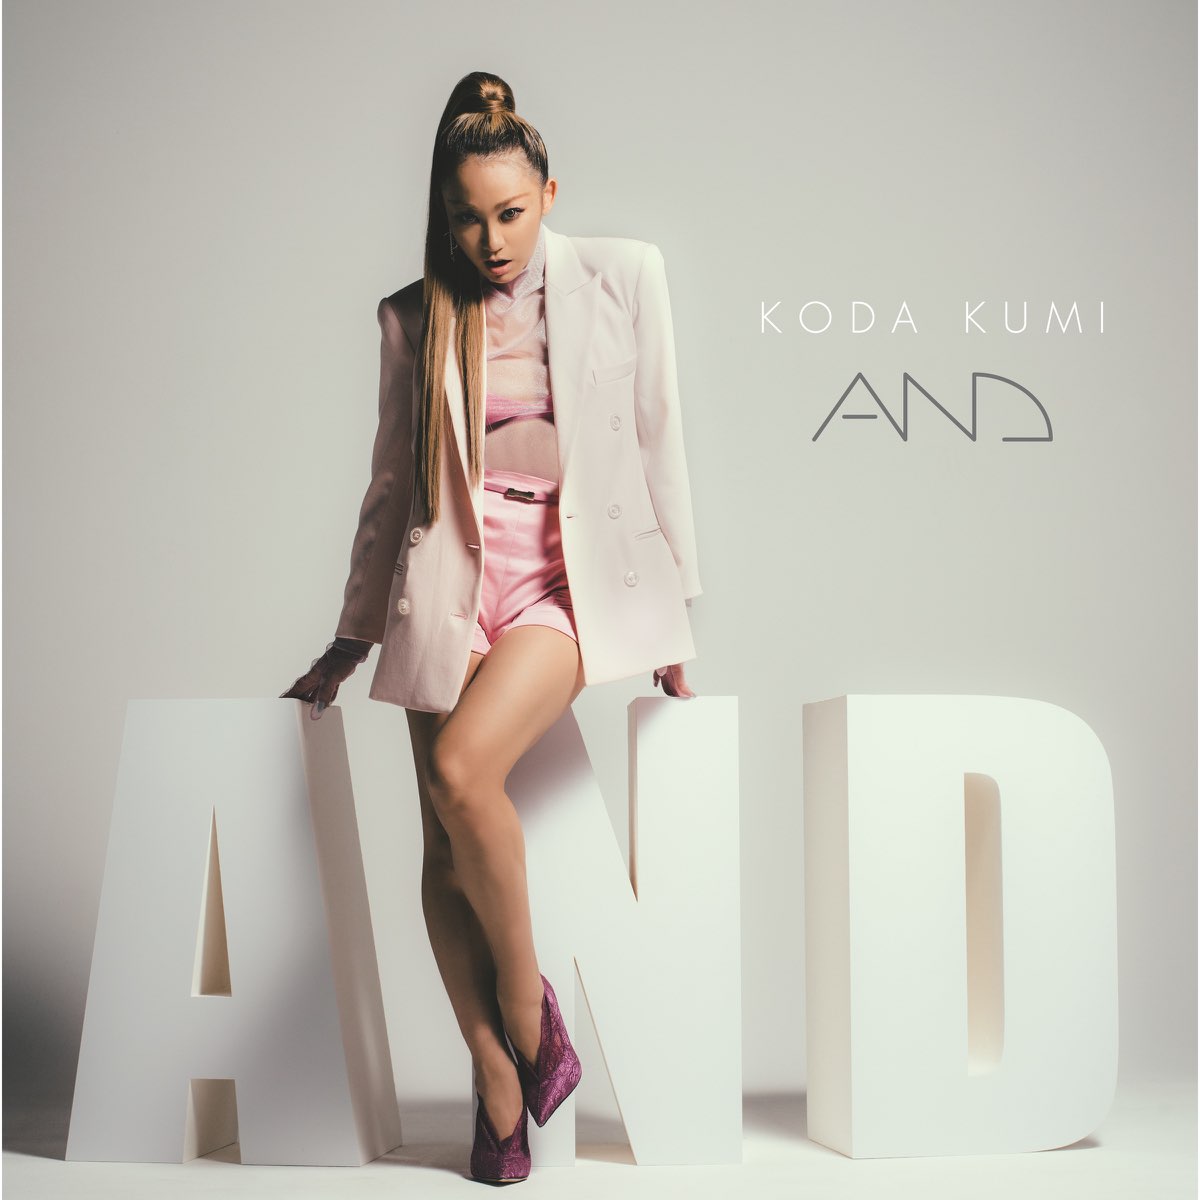 And By Kumi Koda On Apple Music